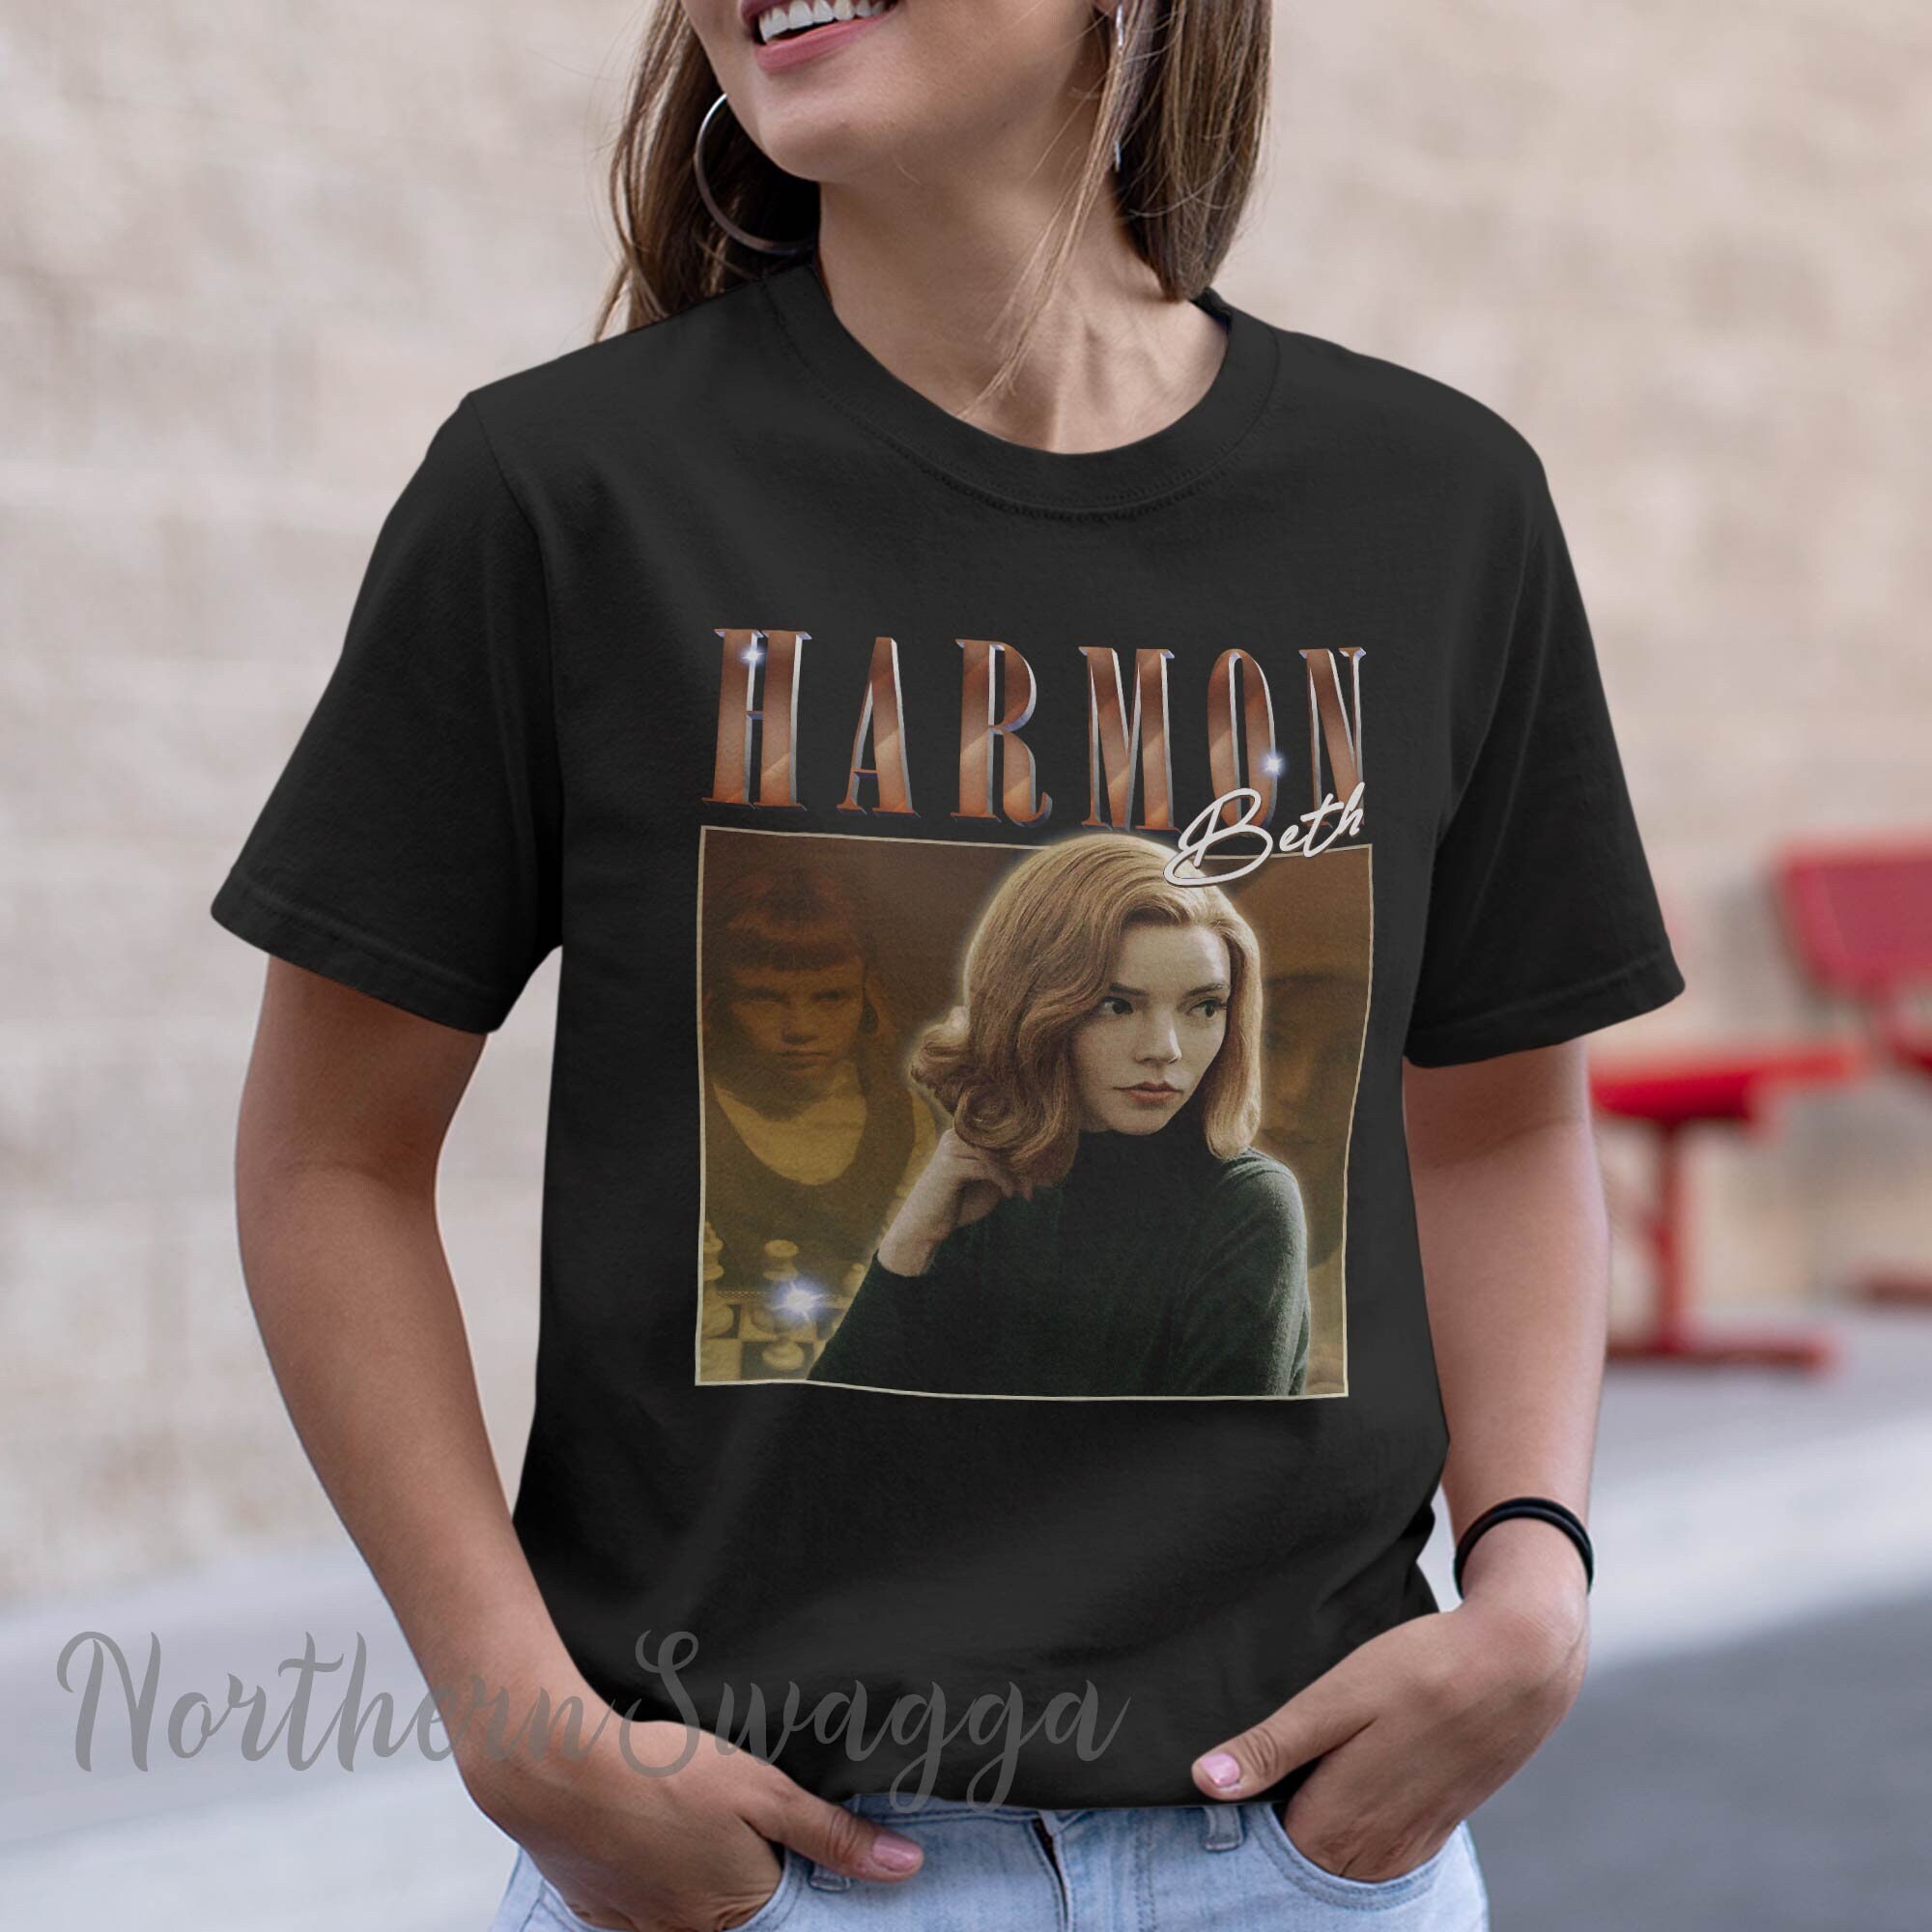 Beth harmon shirt cool fan art t-shirt 90s poster design retro style 109 tee